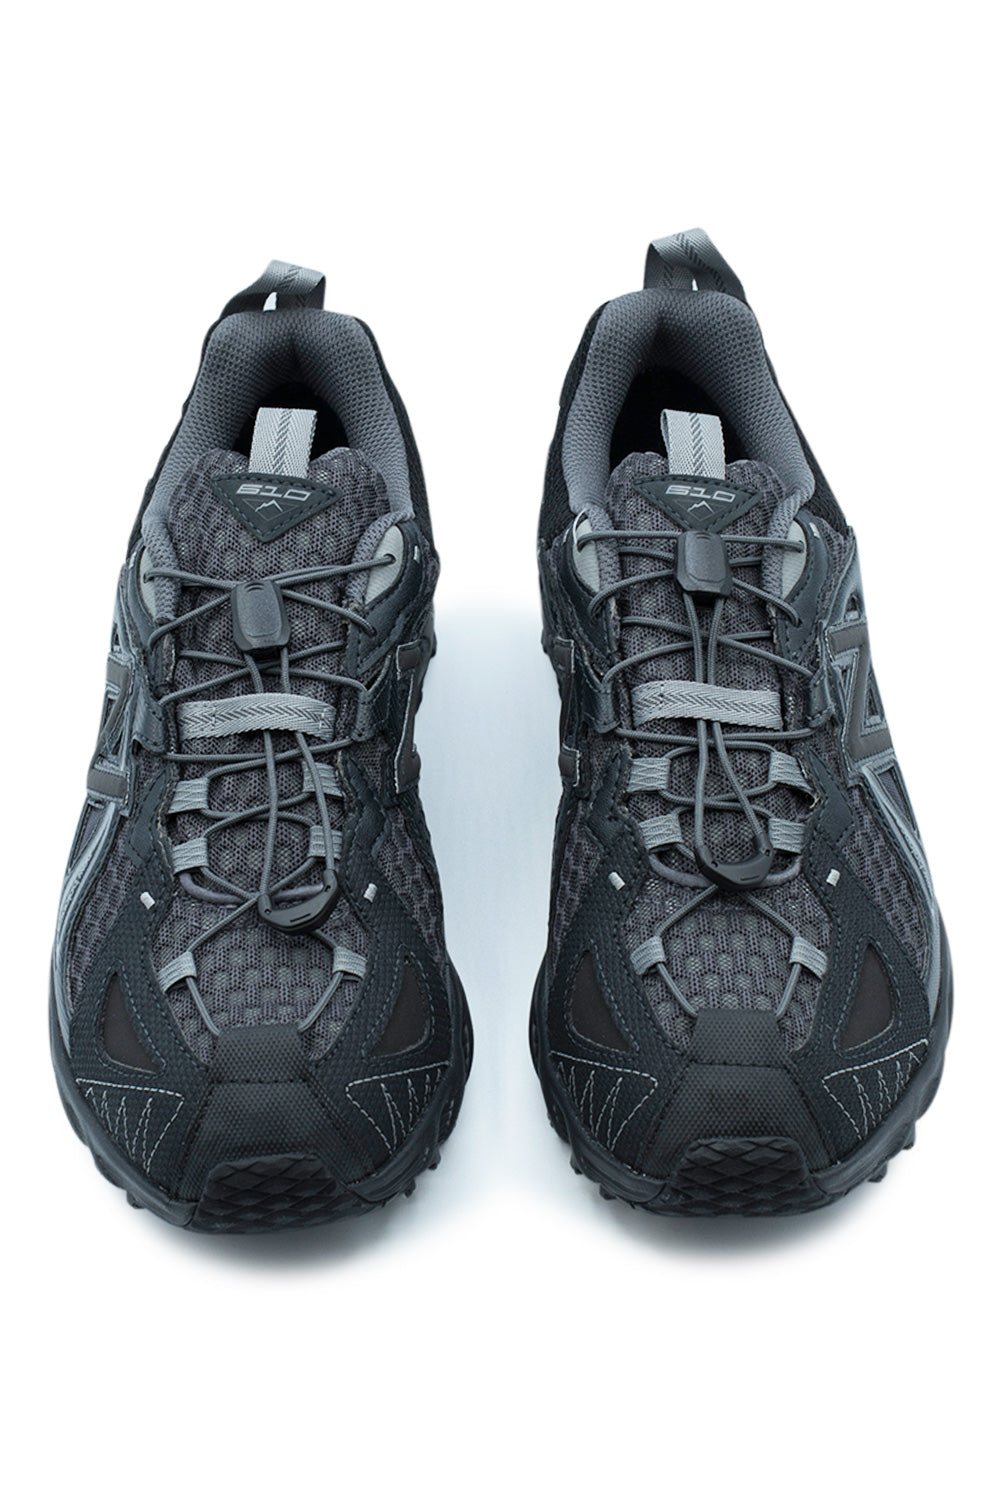 New Balance 610XV1 (GORE-TEX) Shoe Phantom / Magnet / Shadow Grey - BONKERS